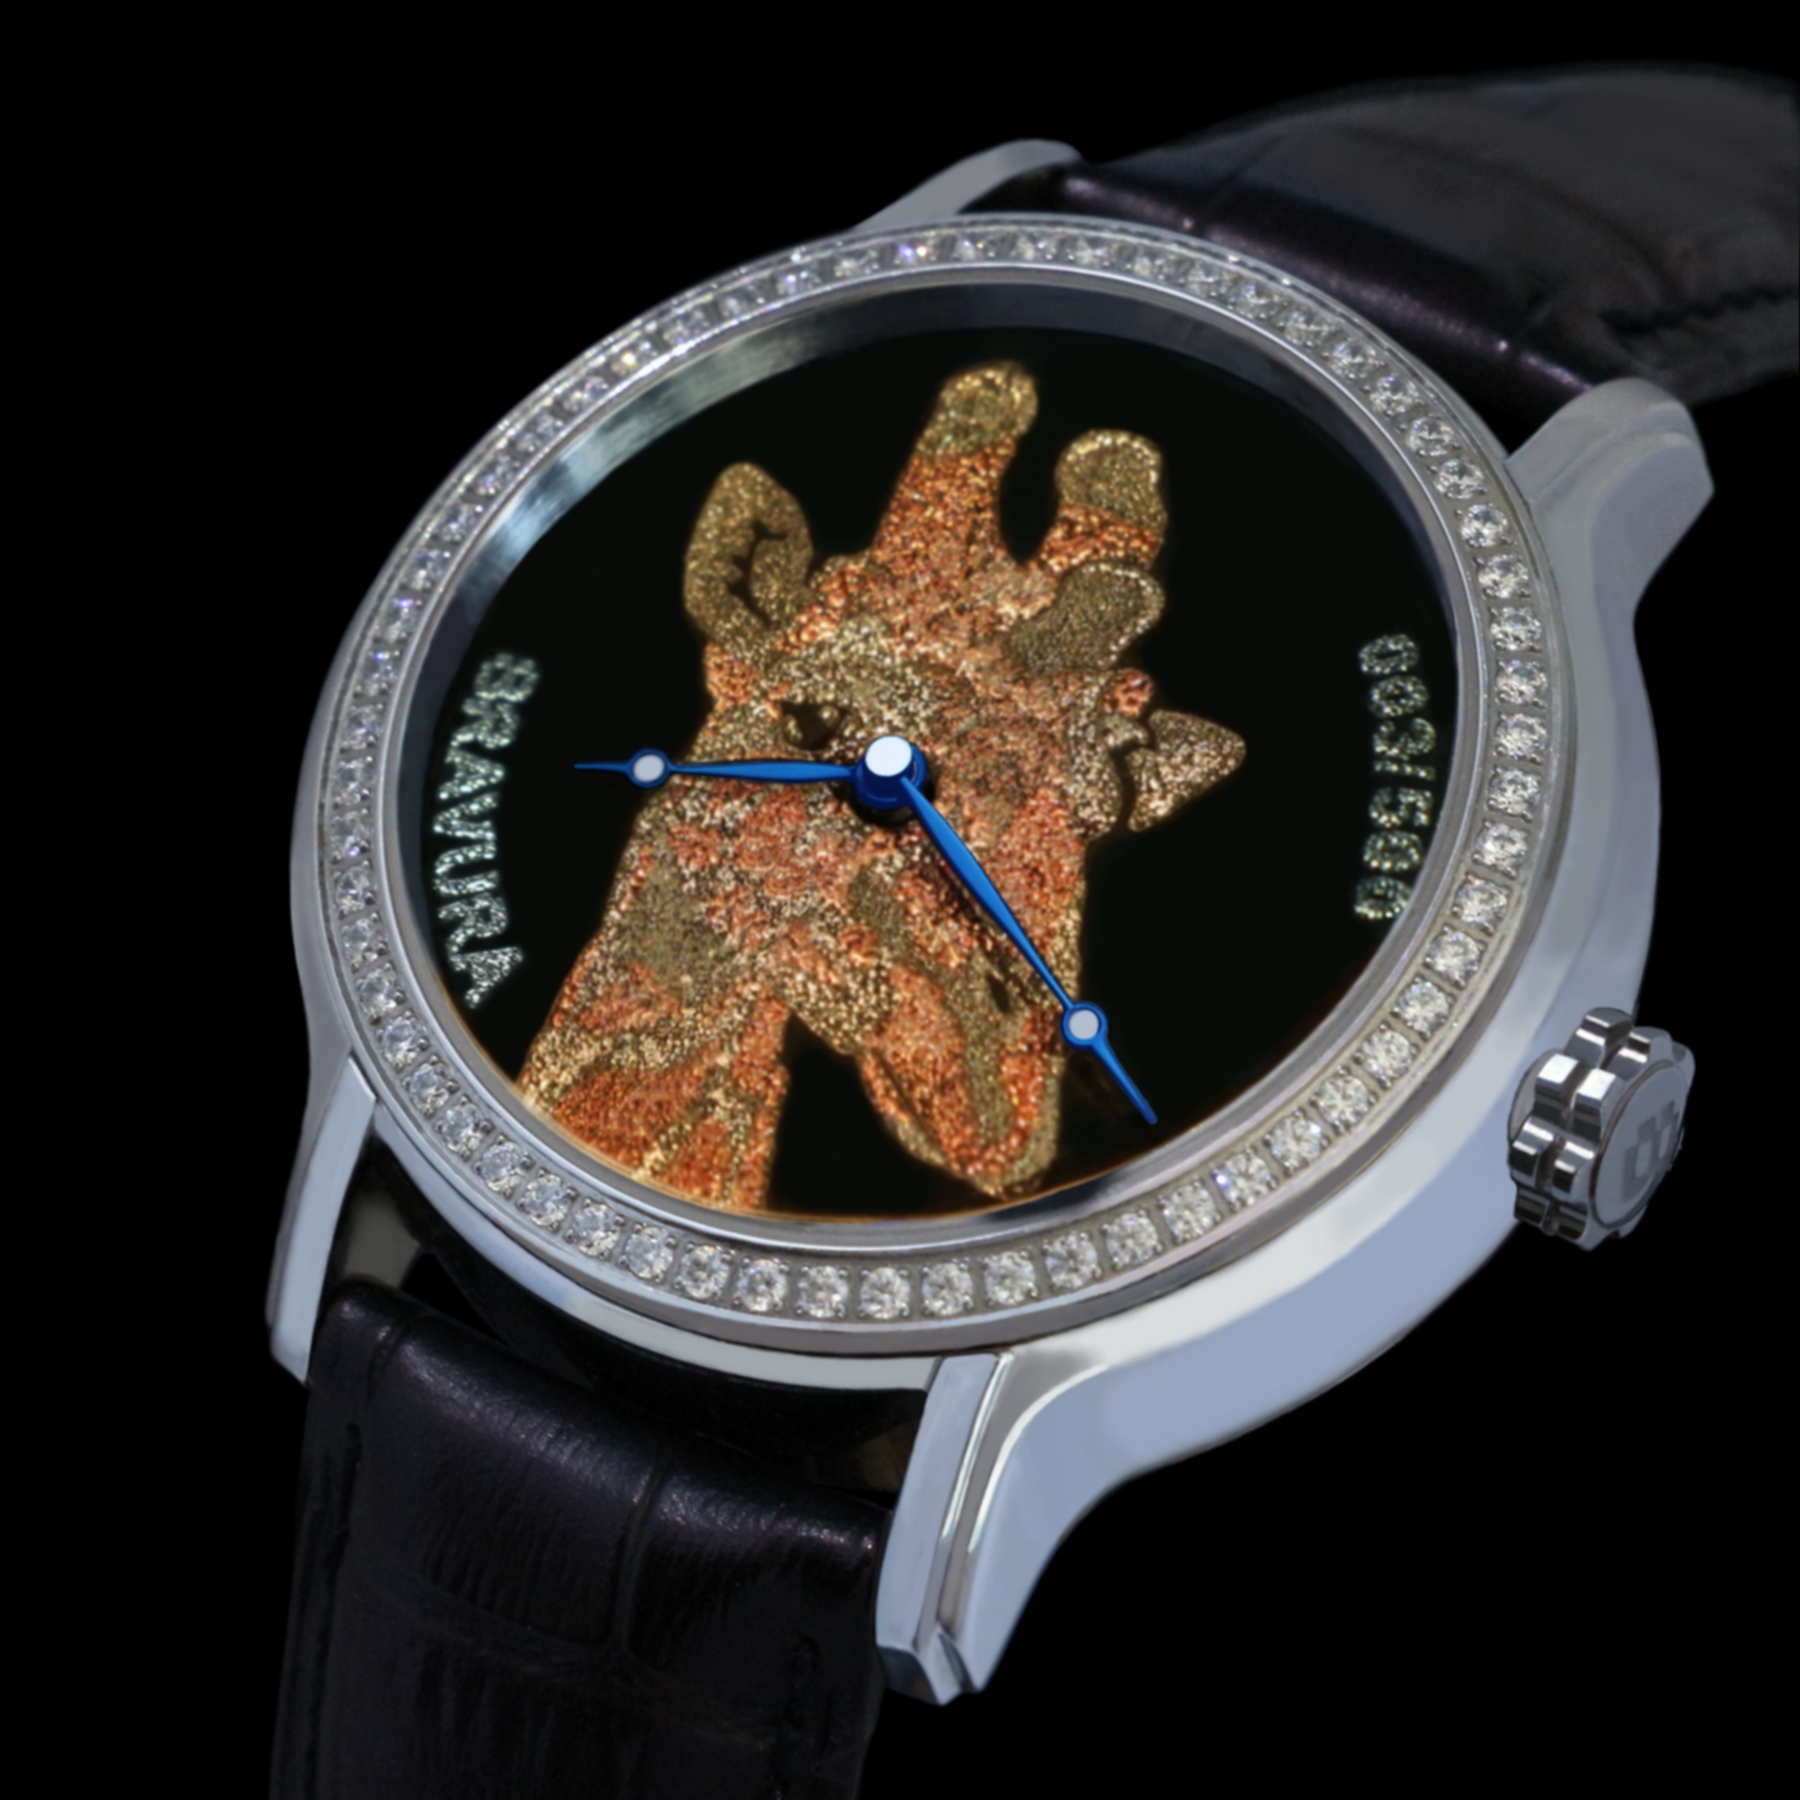 MUSE Design Winners - Gemstone w/ Gold Patterned Watch (GGPW)